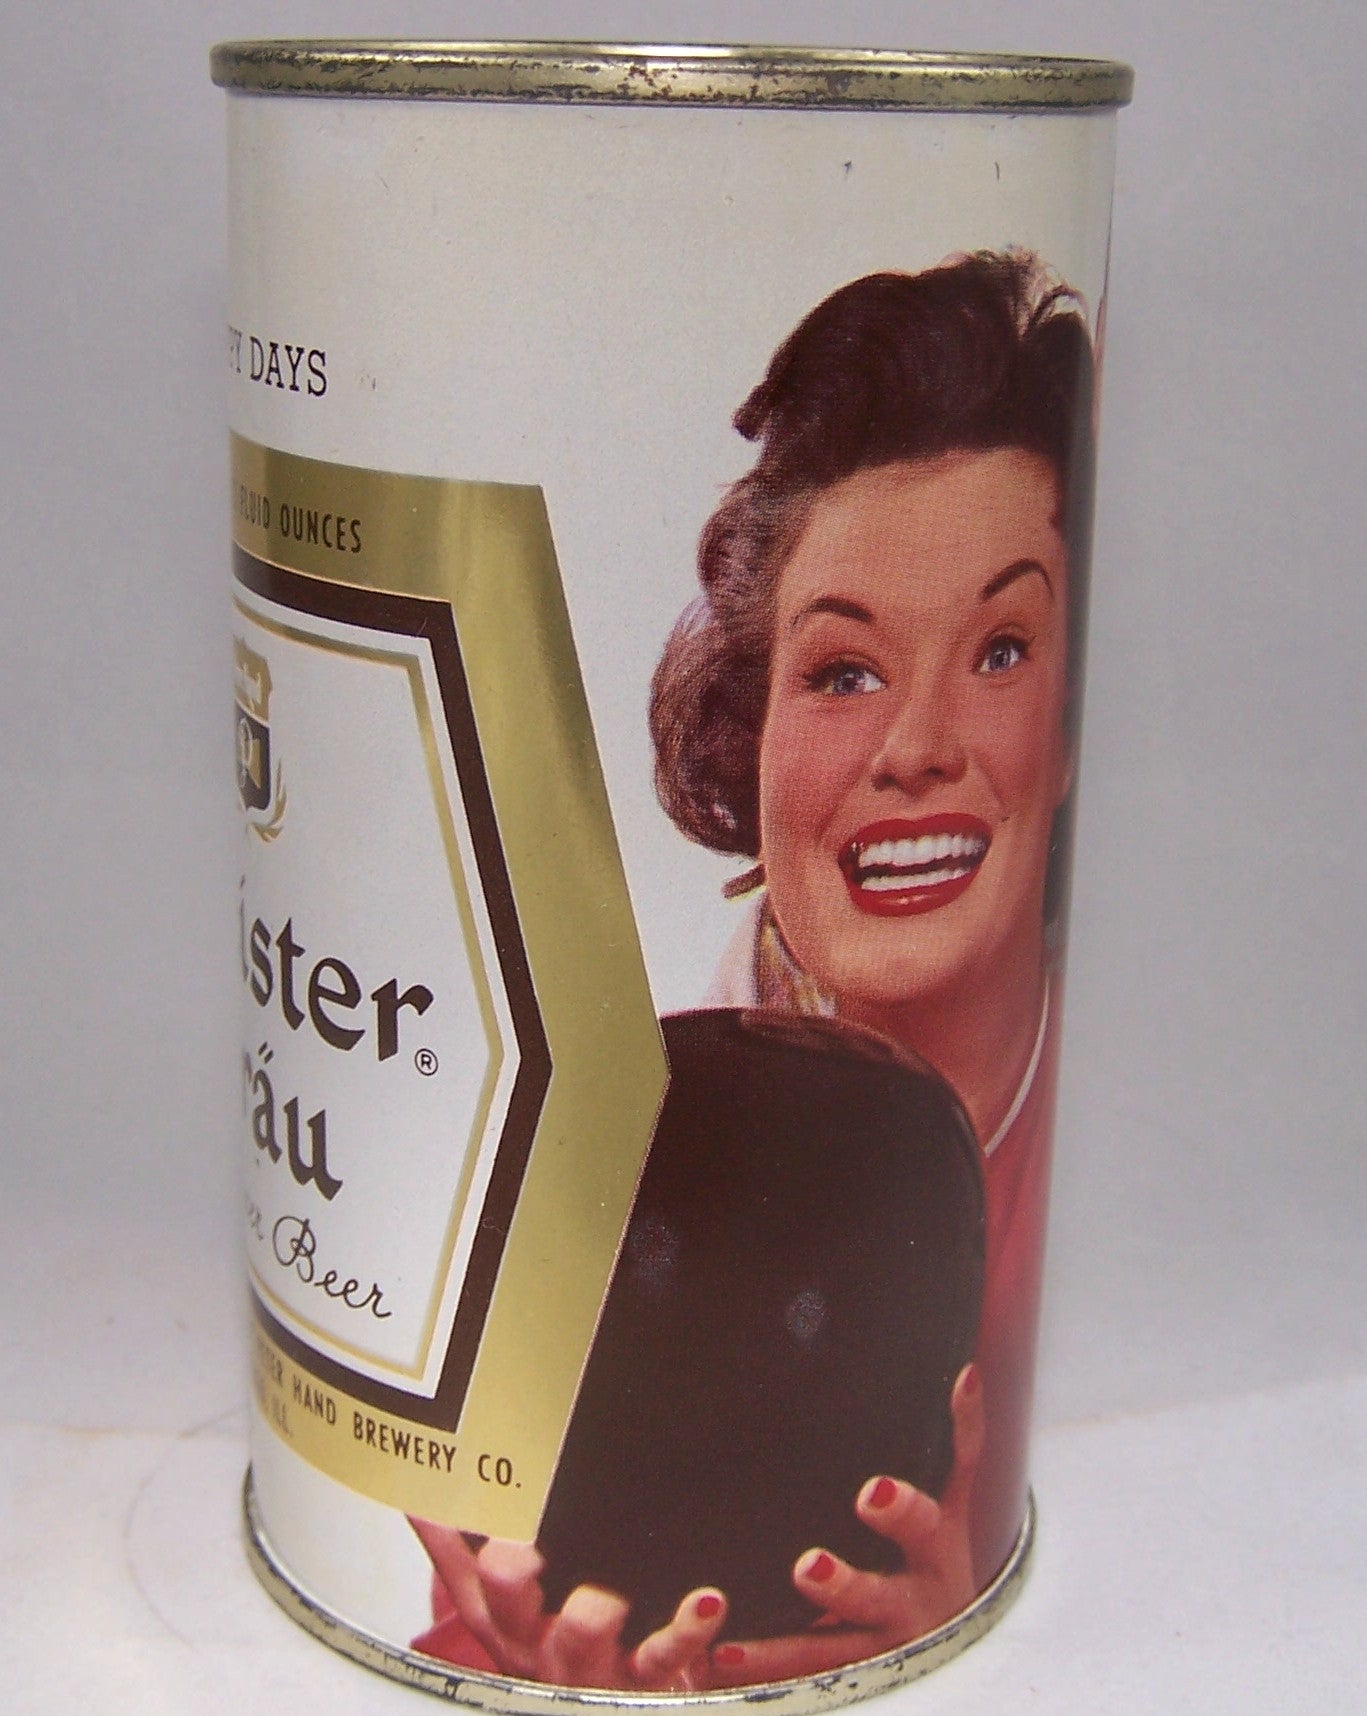 Meister Brau Happy Days Pilsener Beer, (Bowling) USBC 98-30,   Grade 1/1+ Sold on 02/02/16